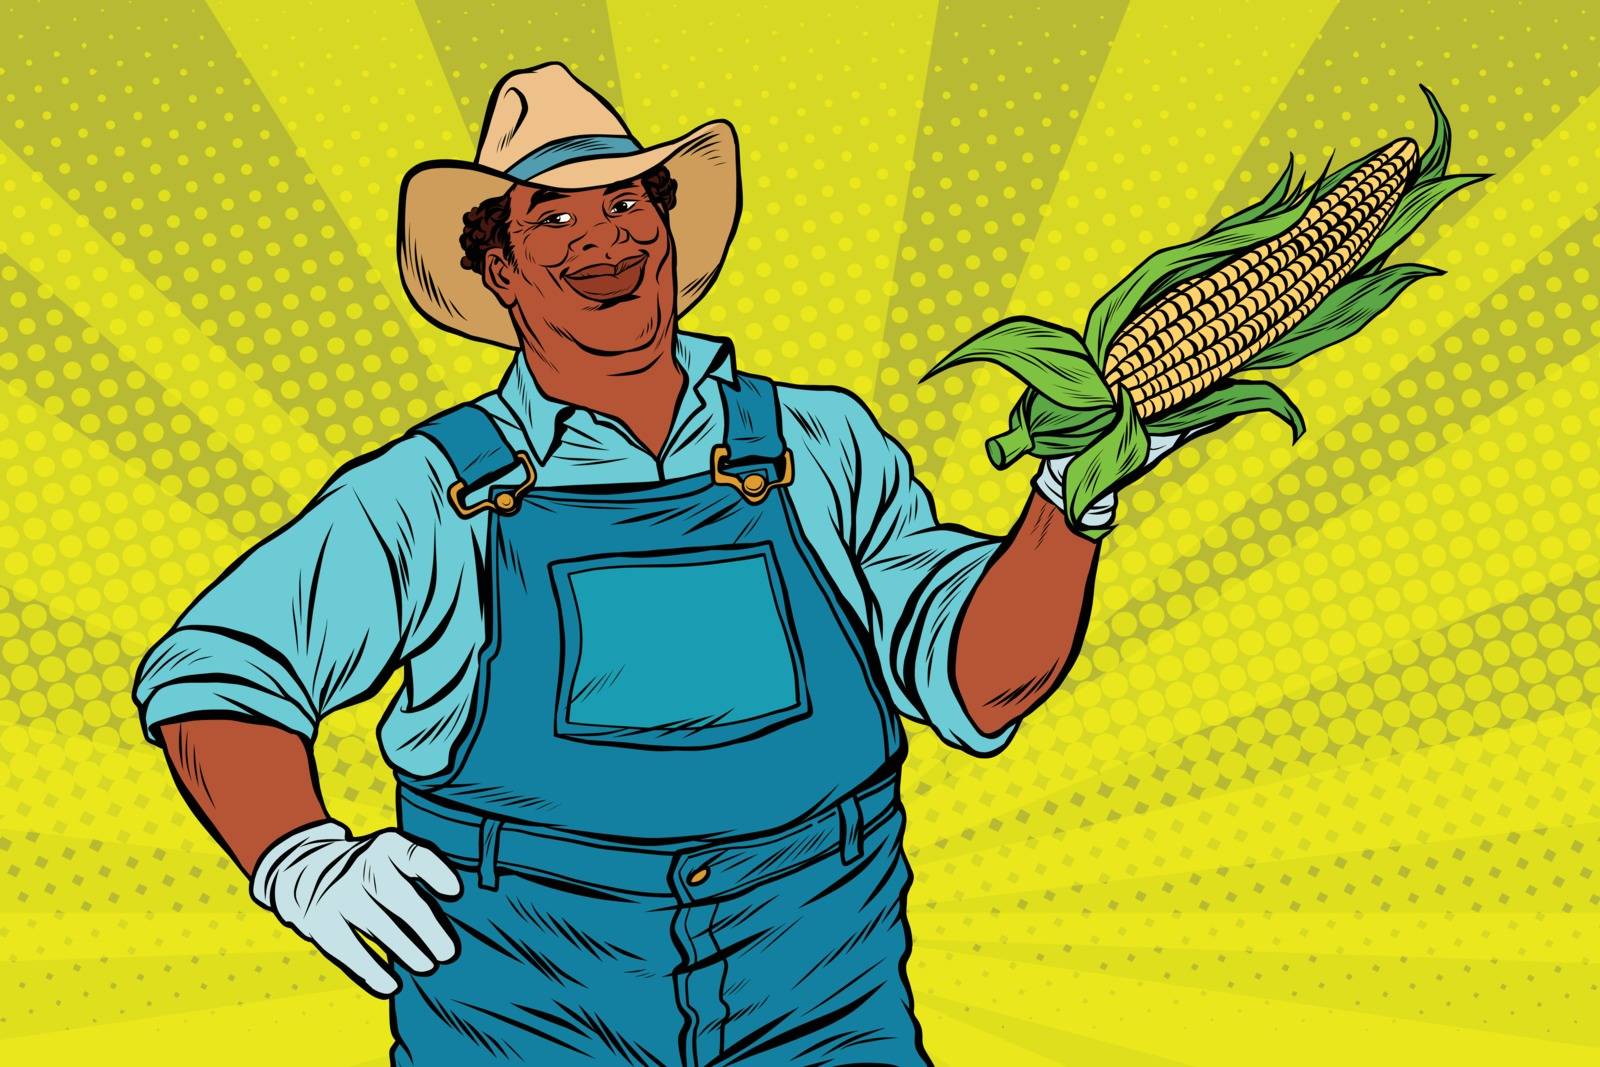 African American farmer with corn on the cob, pop art retro vector illustration